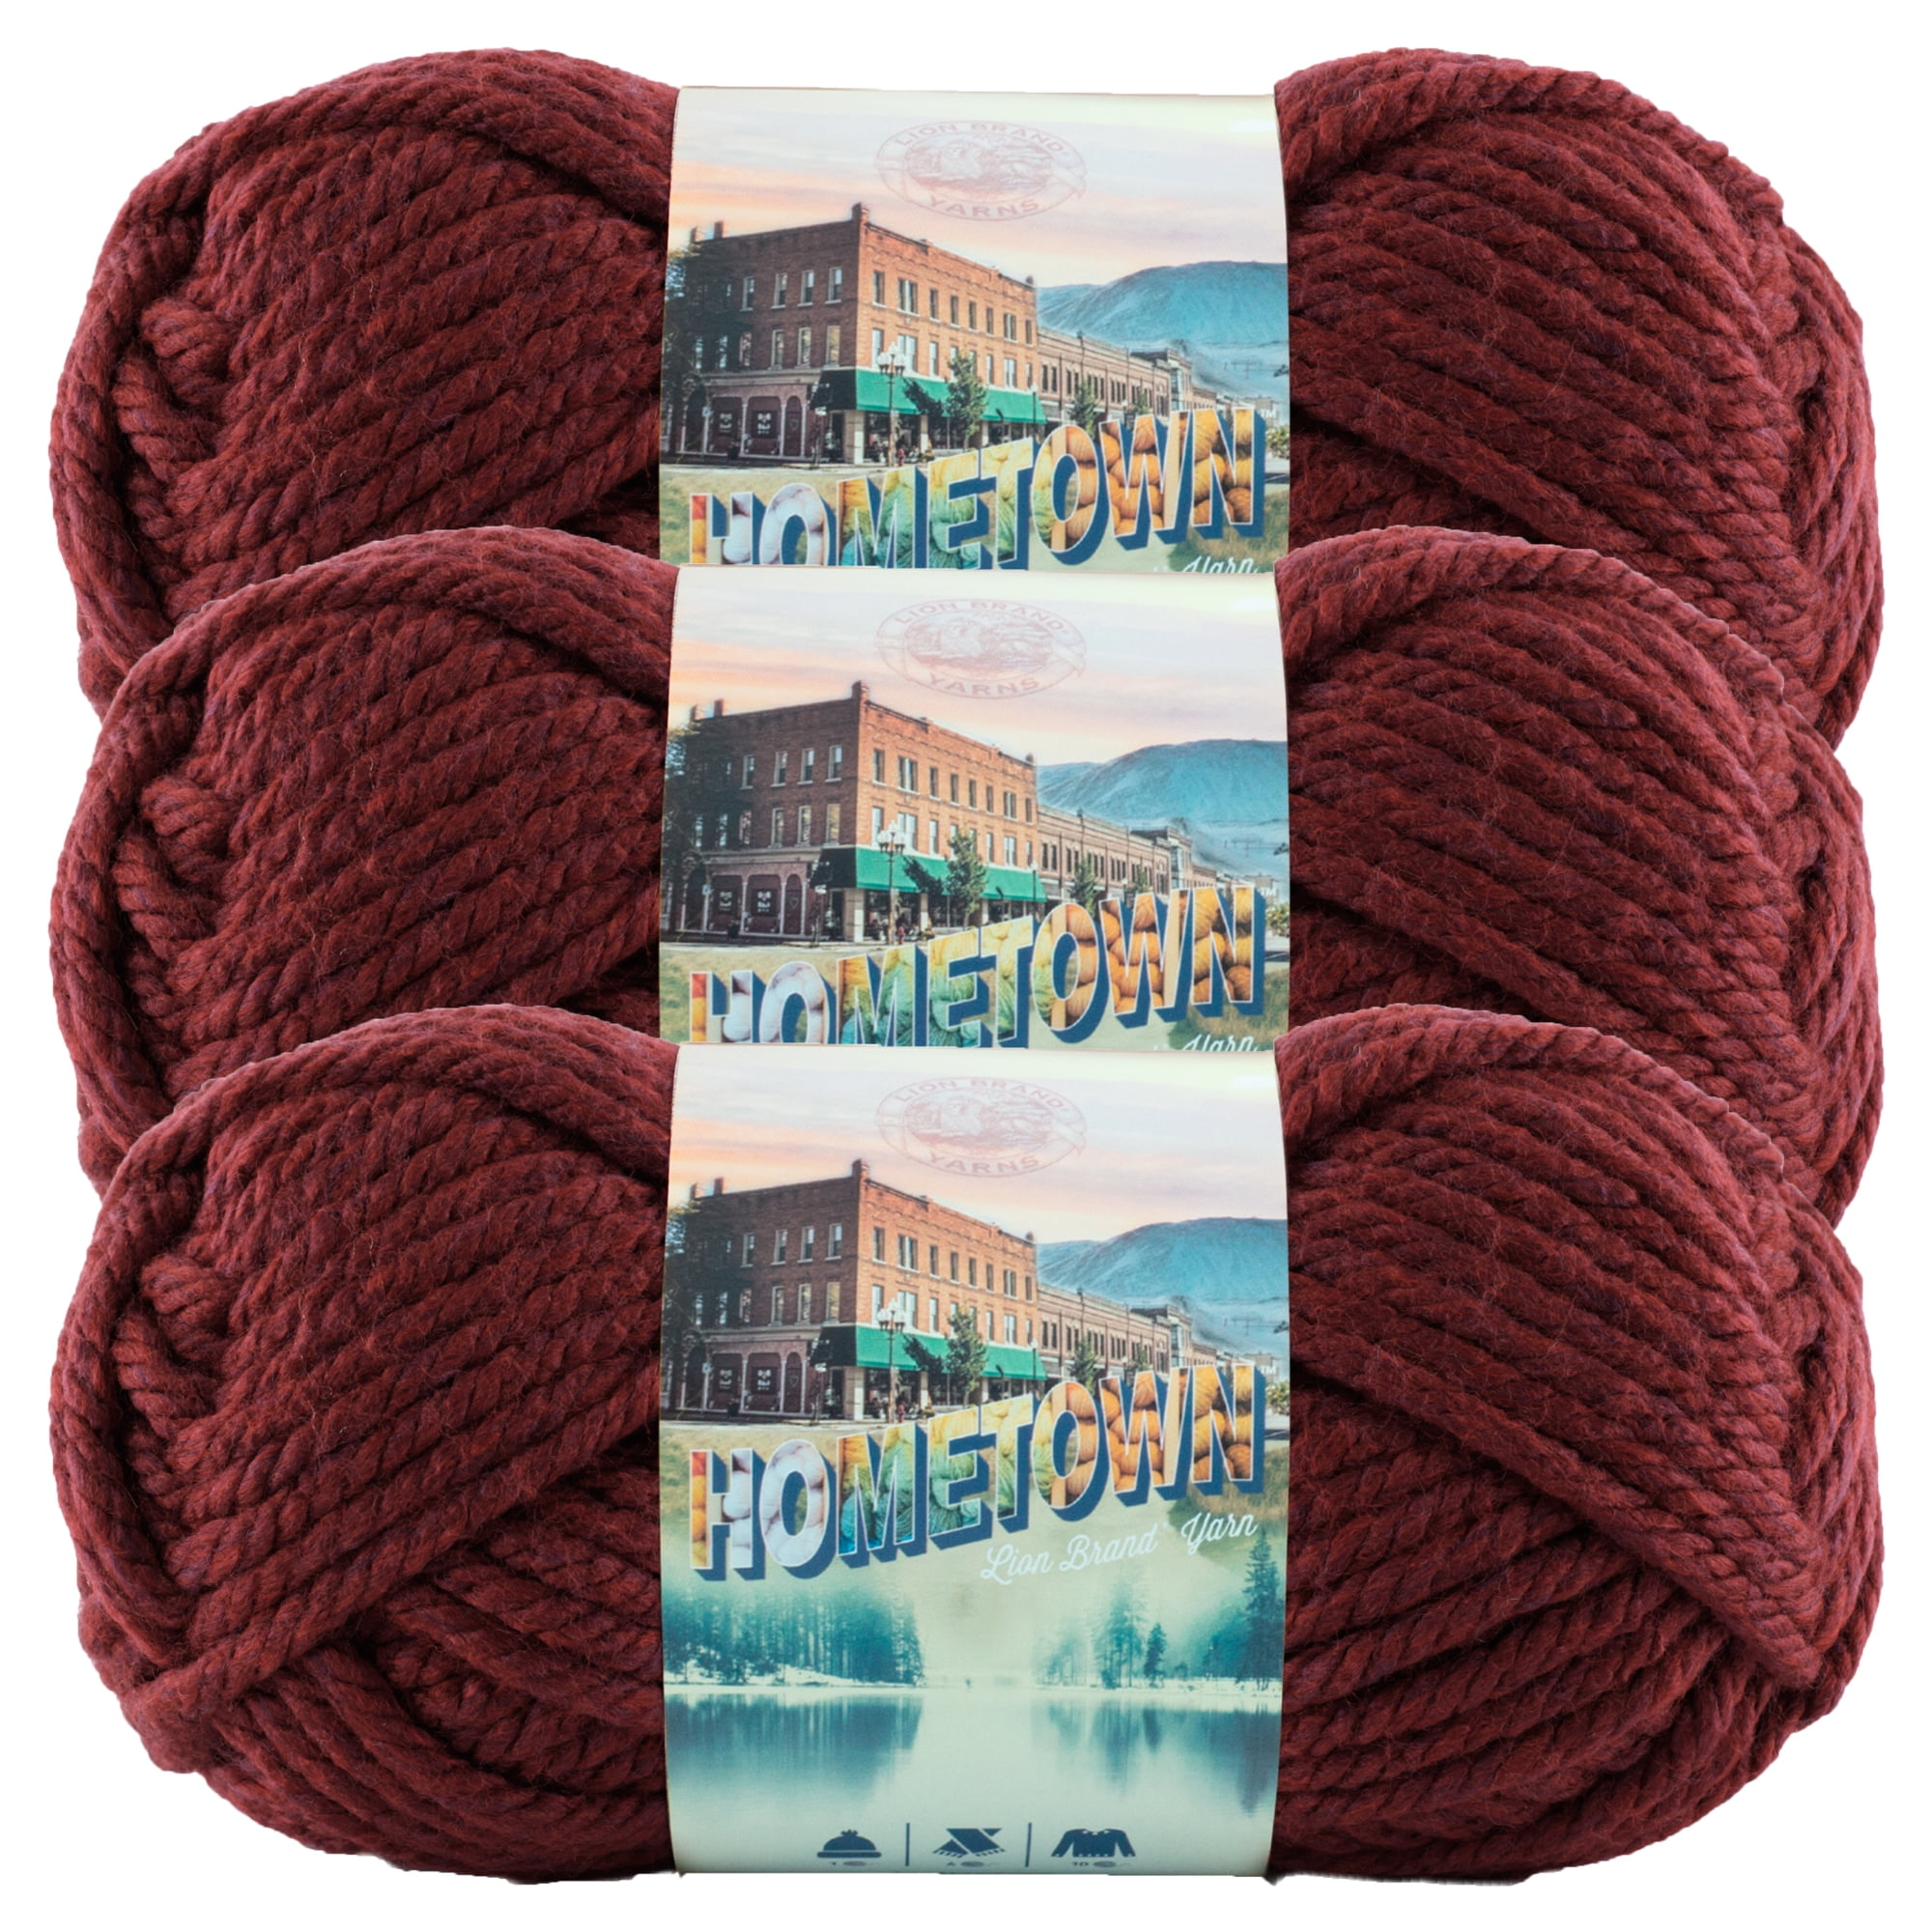 Lion Brand Hometown Yarn Cincinnati Red Knitting Crochet Super Bulky